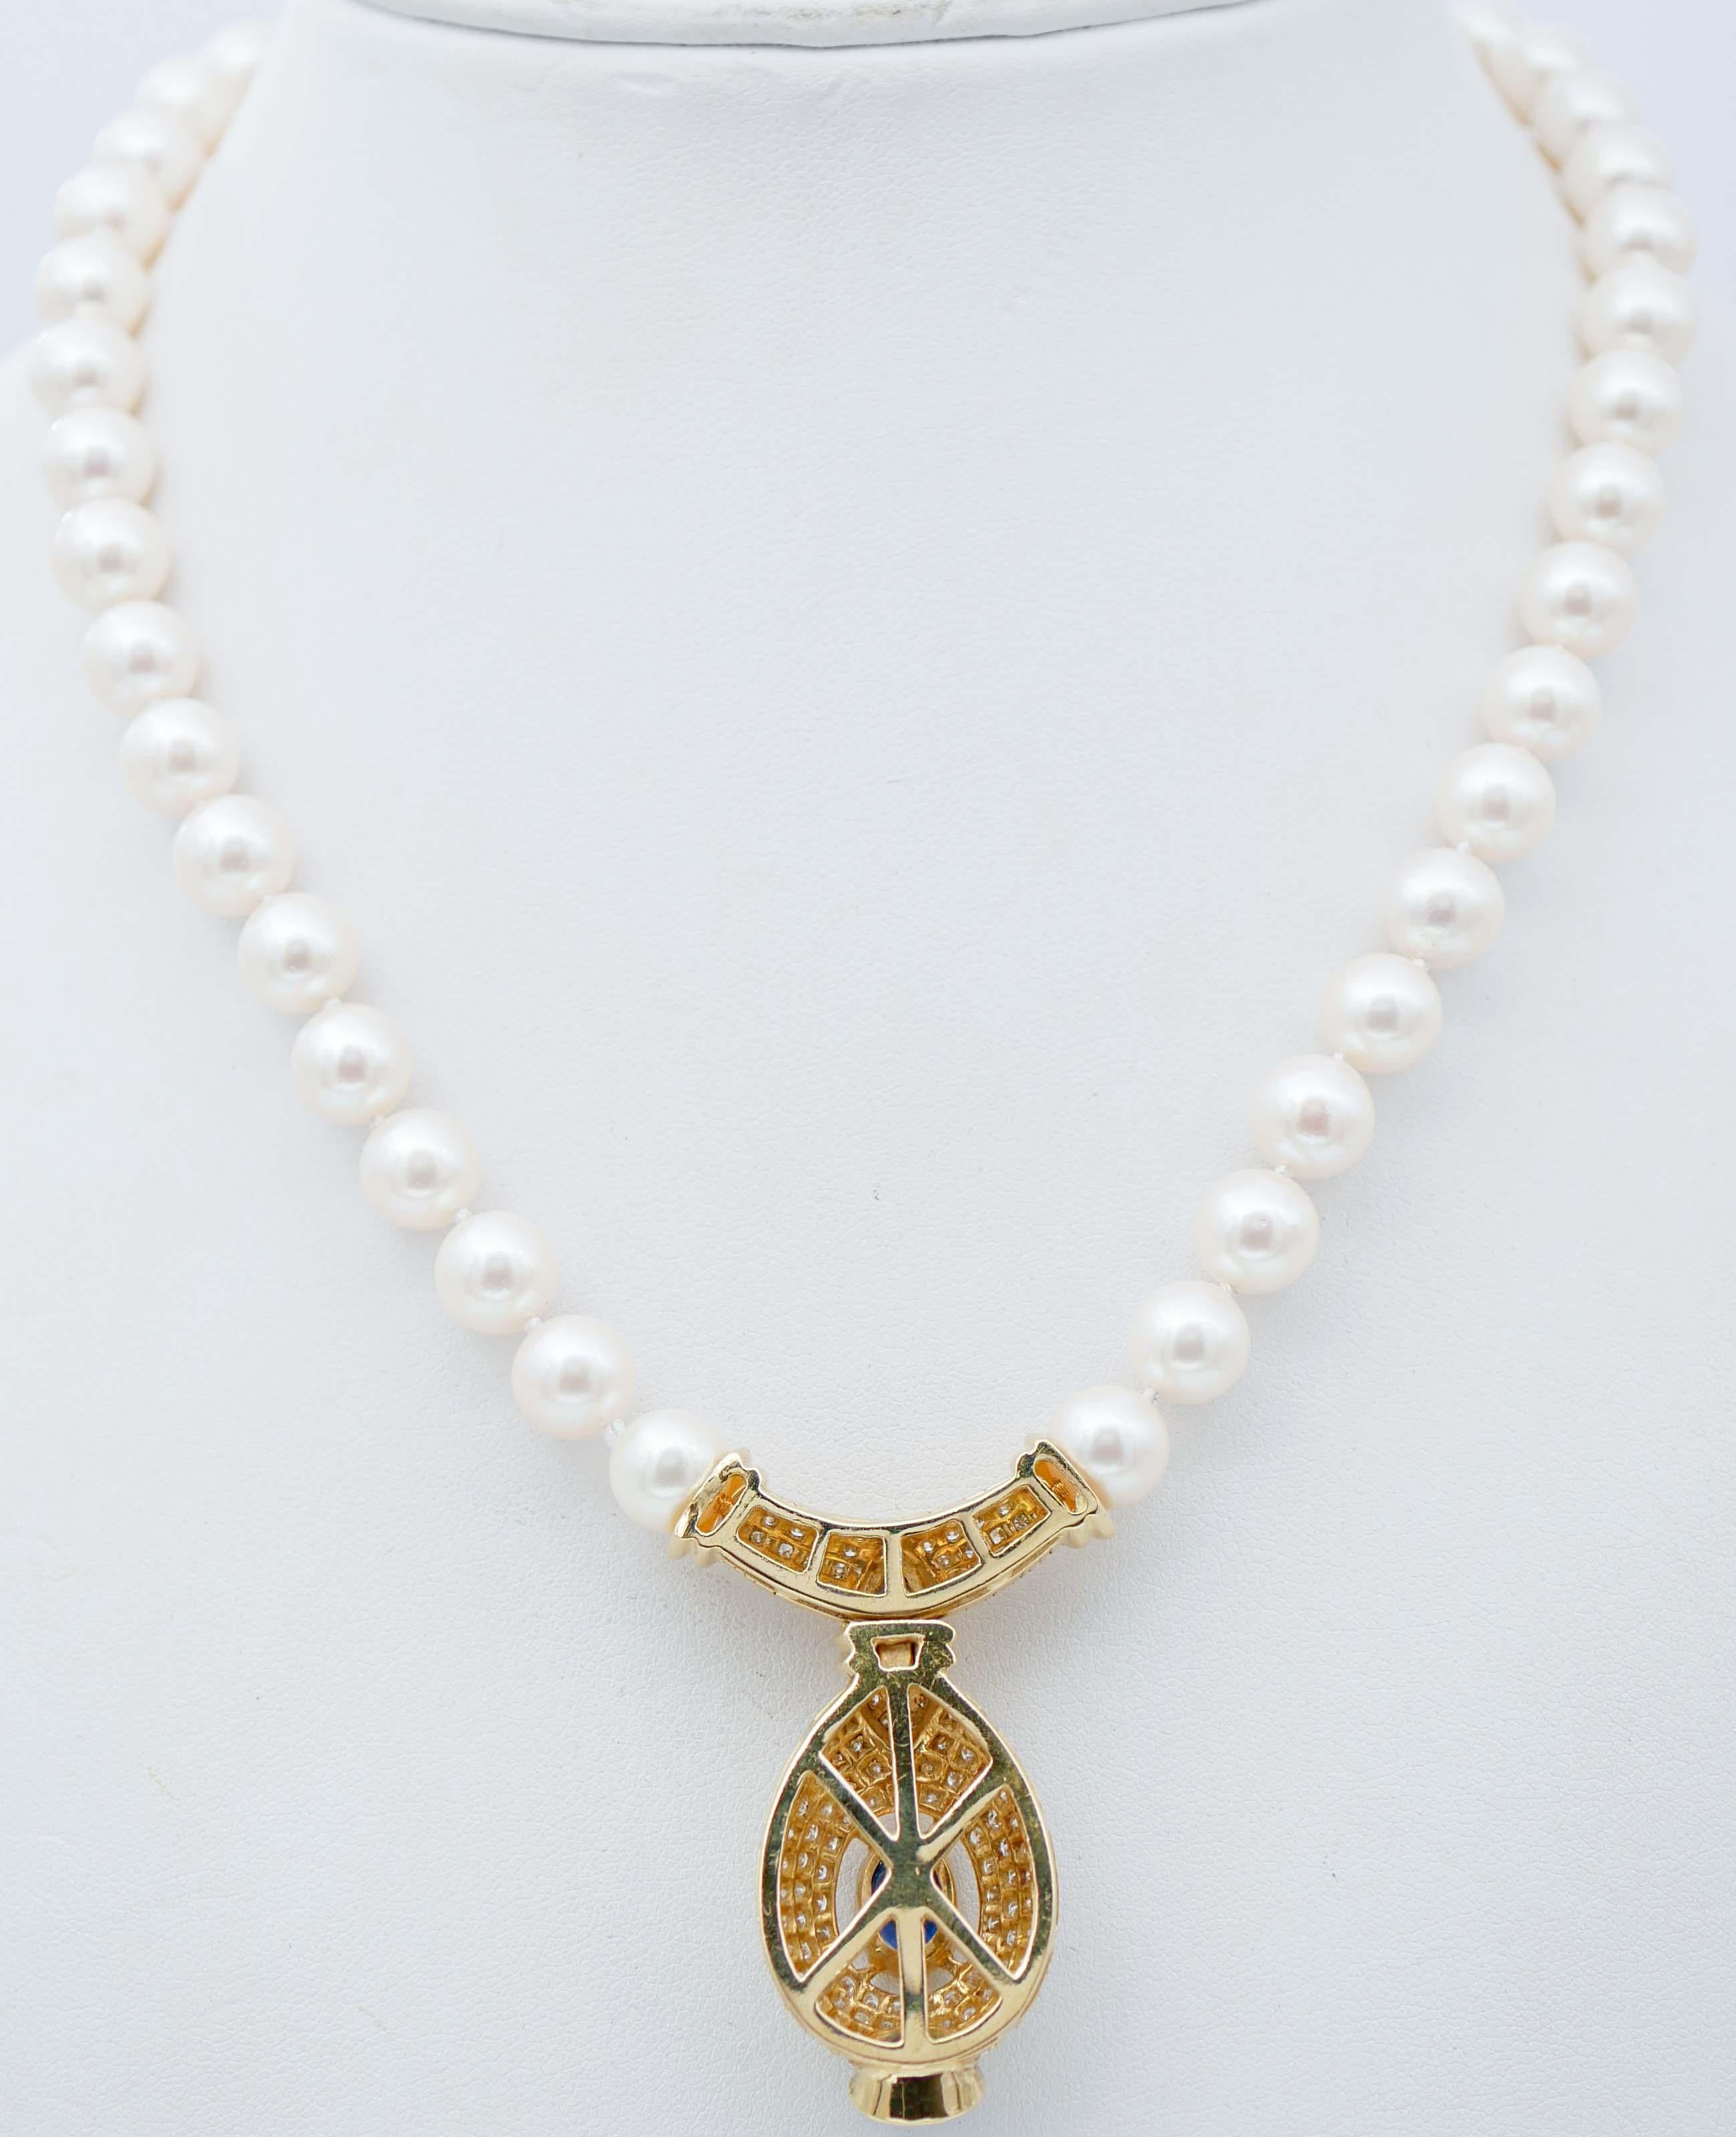 Mixed Cut Sapphires, Pearls, Diamonds, 18 Karat Yellow Gold Necklace.